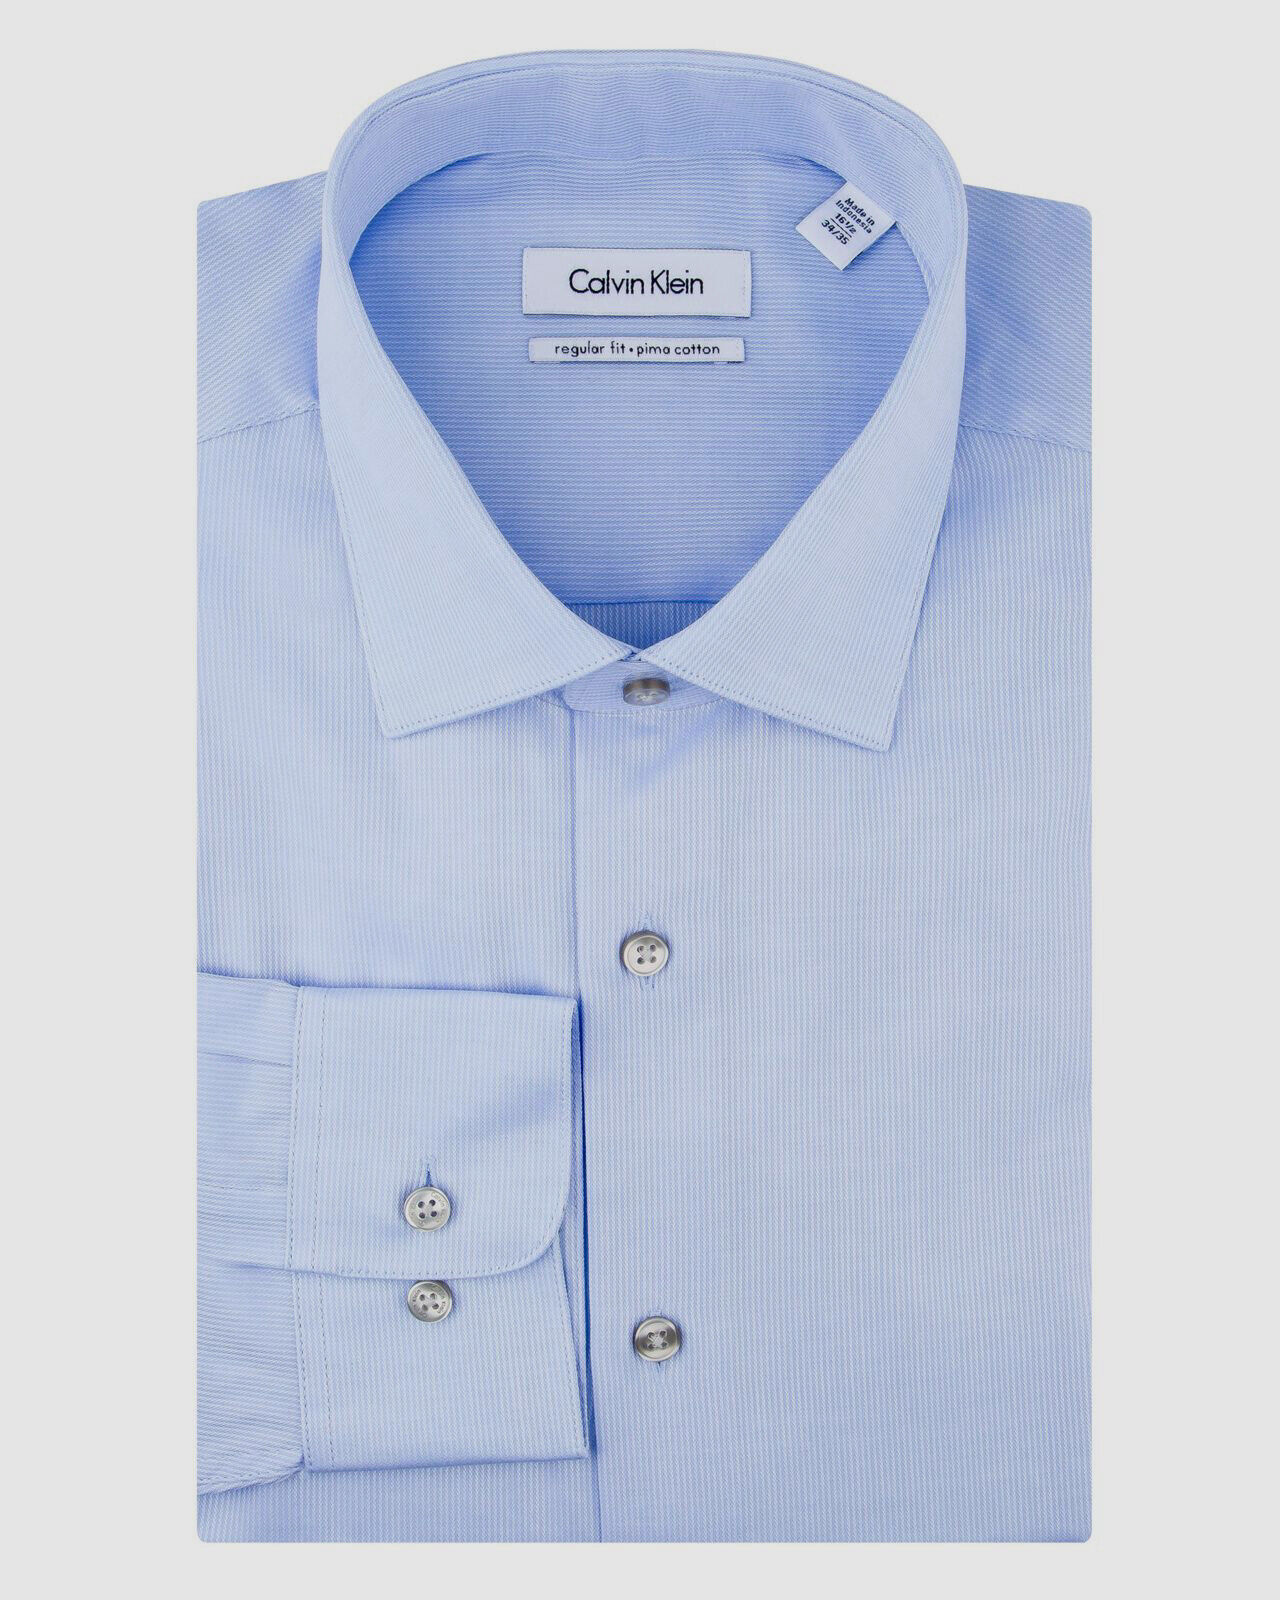 Calvin Klein Blue 15 X 32/33 Regular Fit Men Dress Shirt Non-iron S20 for  sale online | eBay